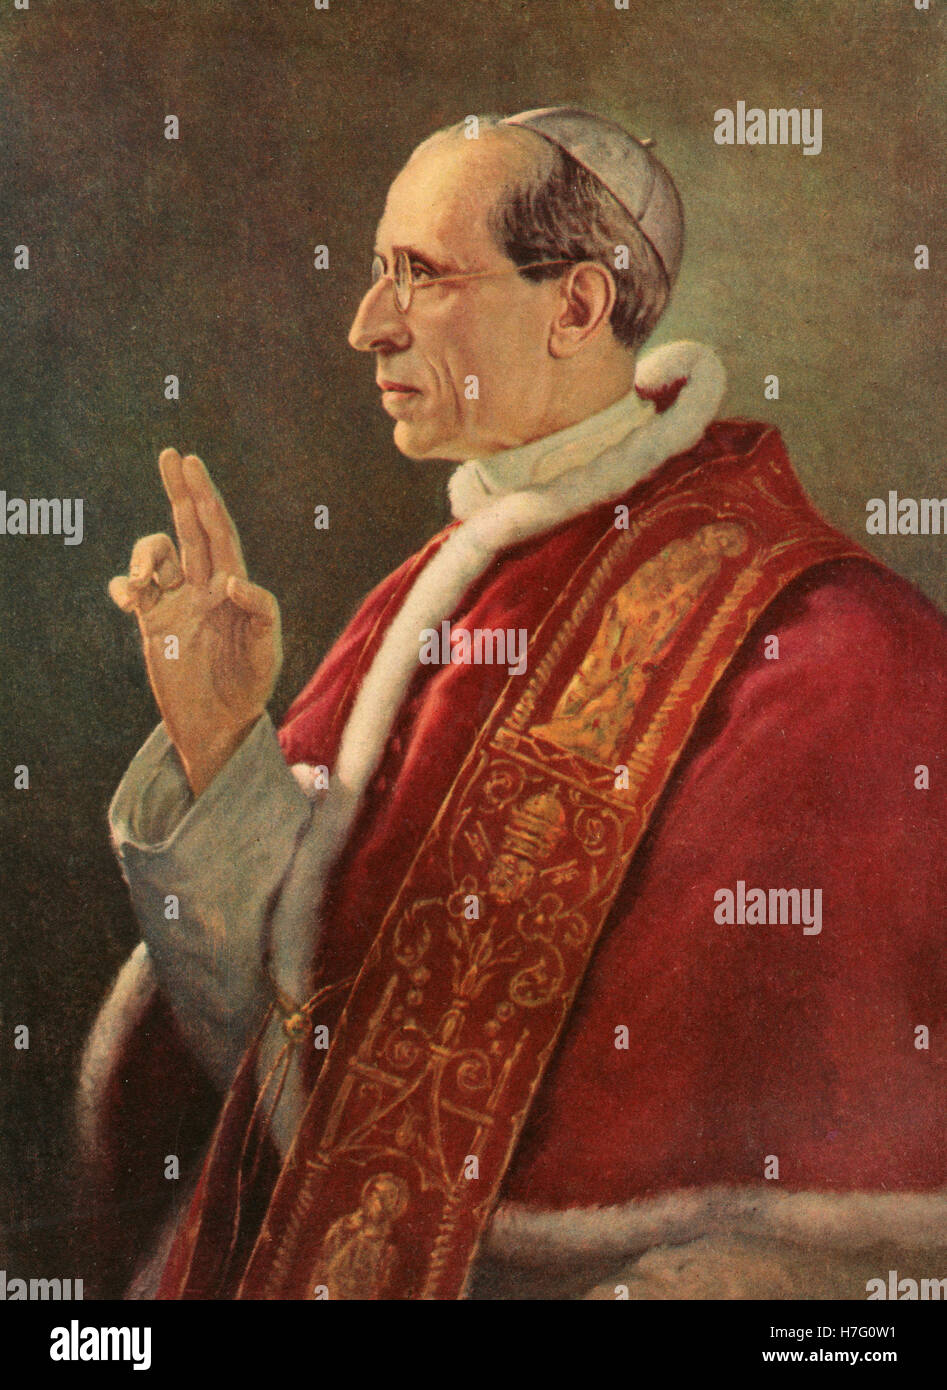 Portrait of Pope Pius XII Stock Photo